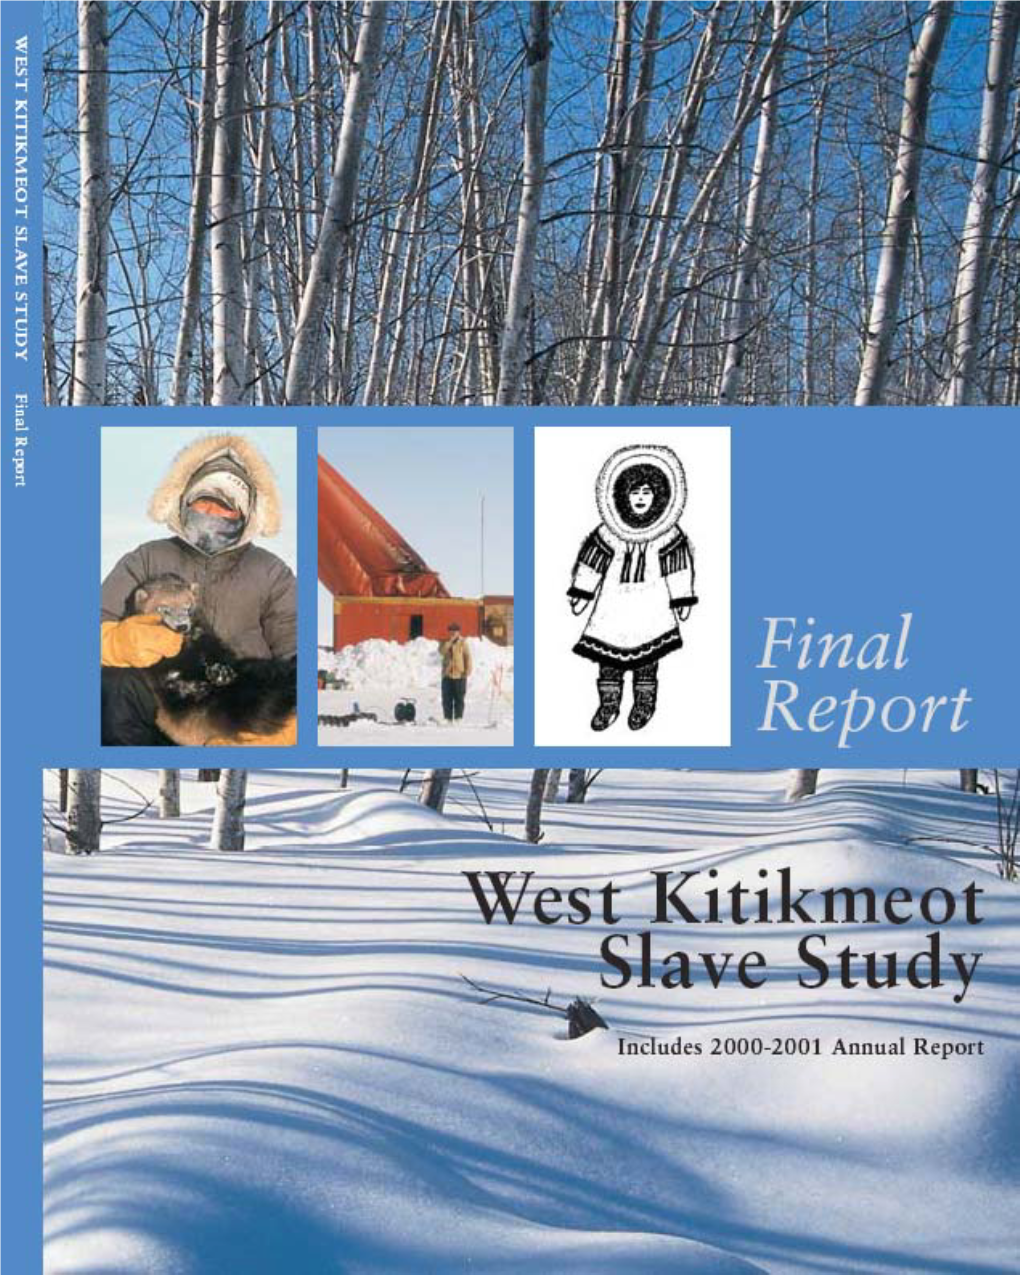 West Kitikmeot Slave Study Society